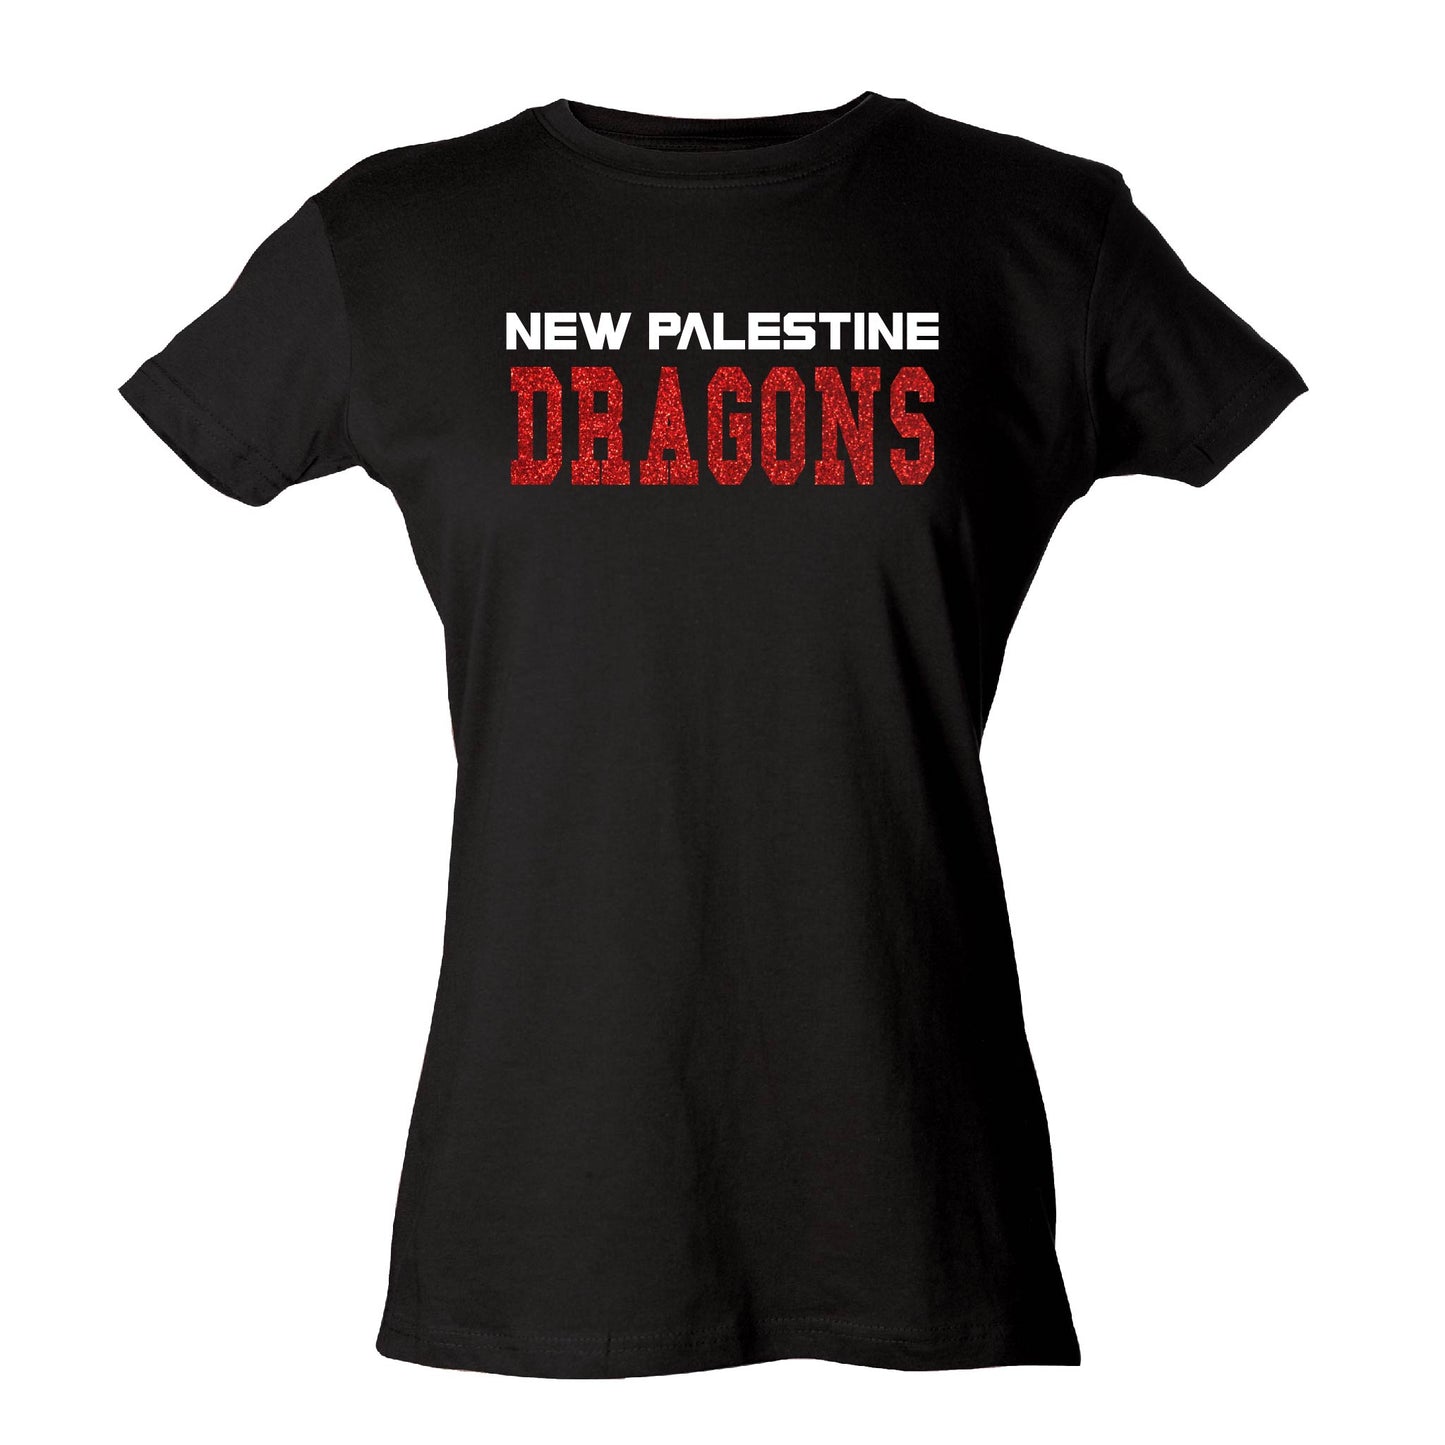 Womens Slim Fit Jersey Tee - New Palestine Dragons1 (Glitter)